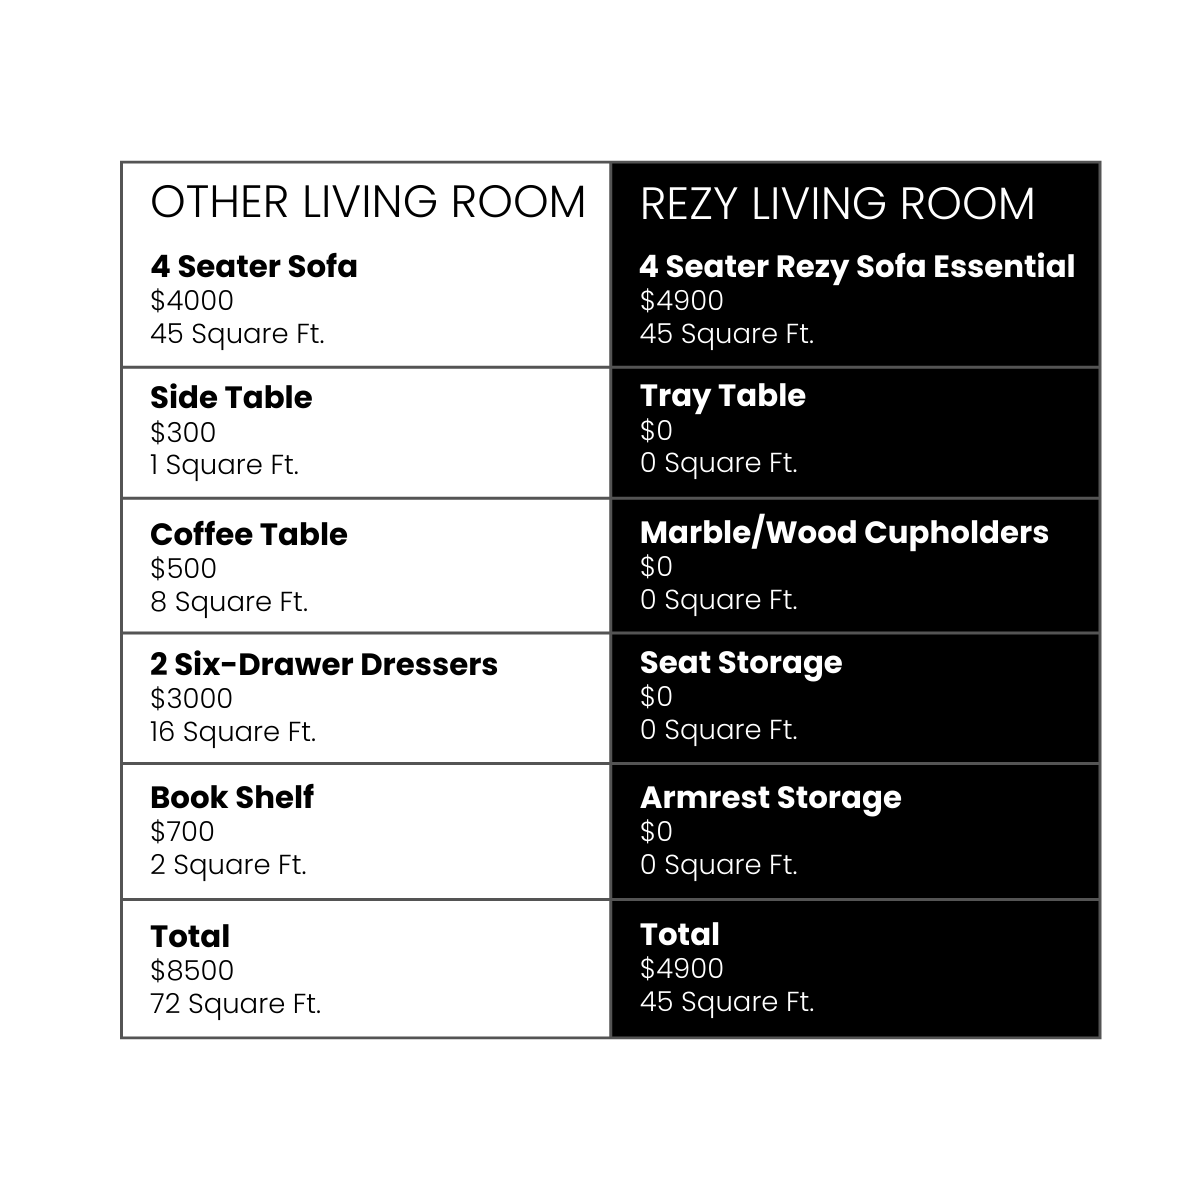 Living room furnishing comparison